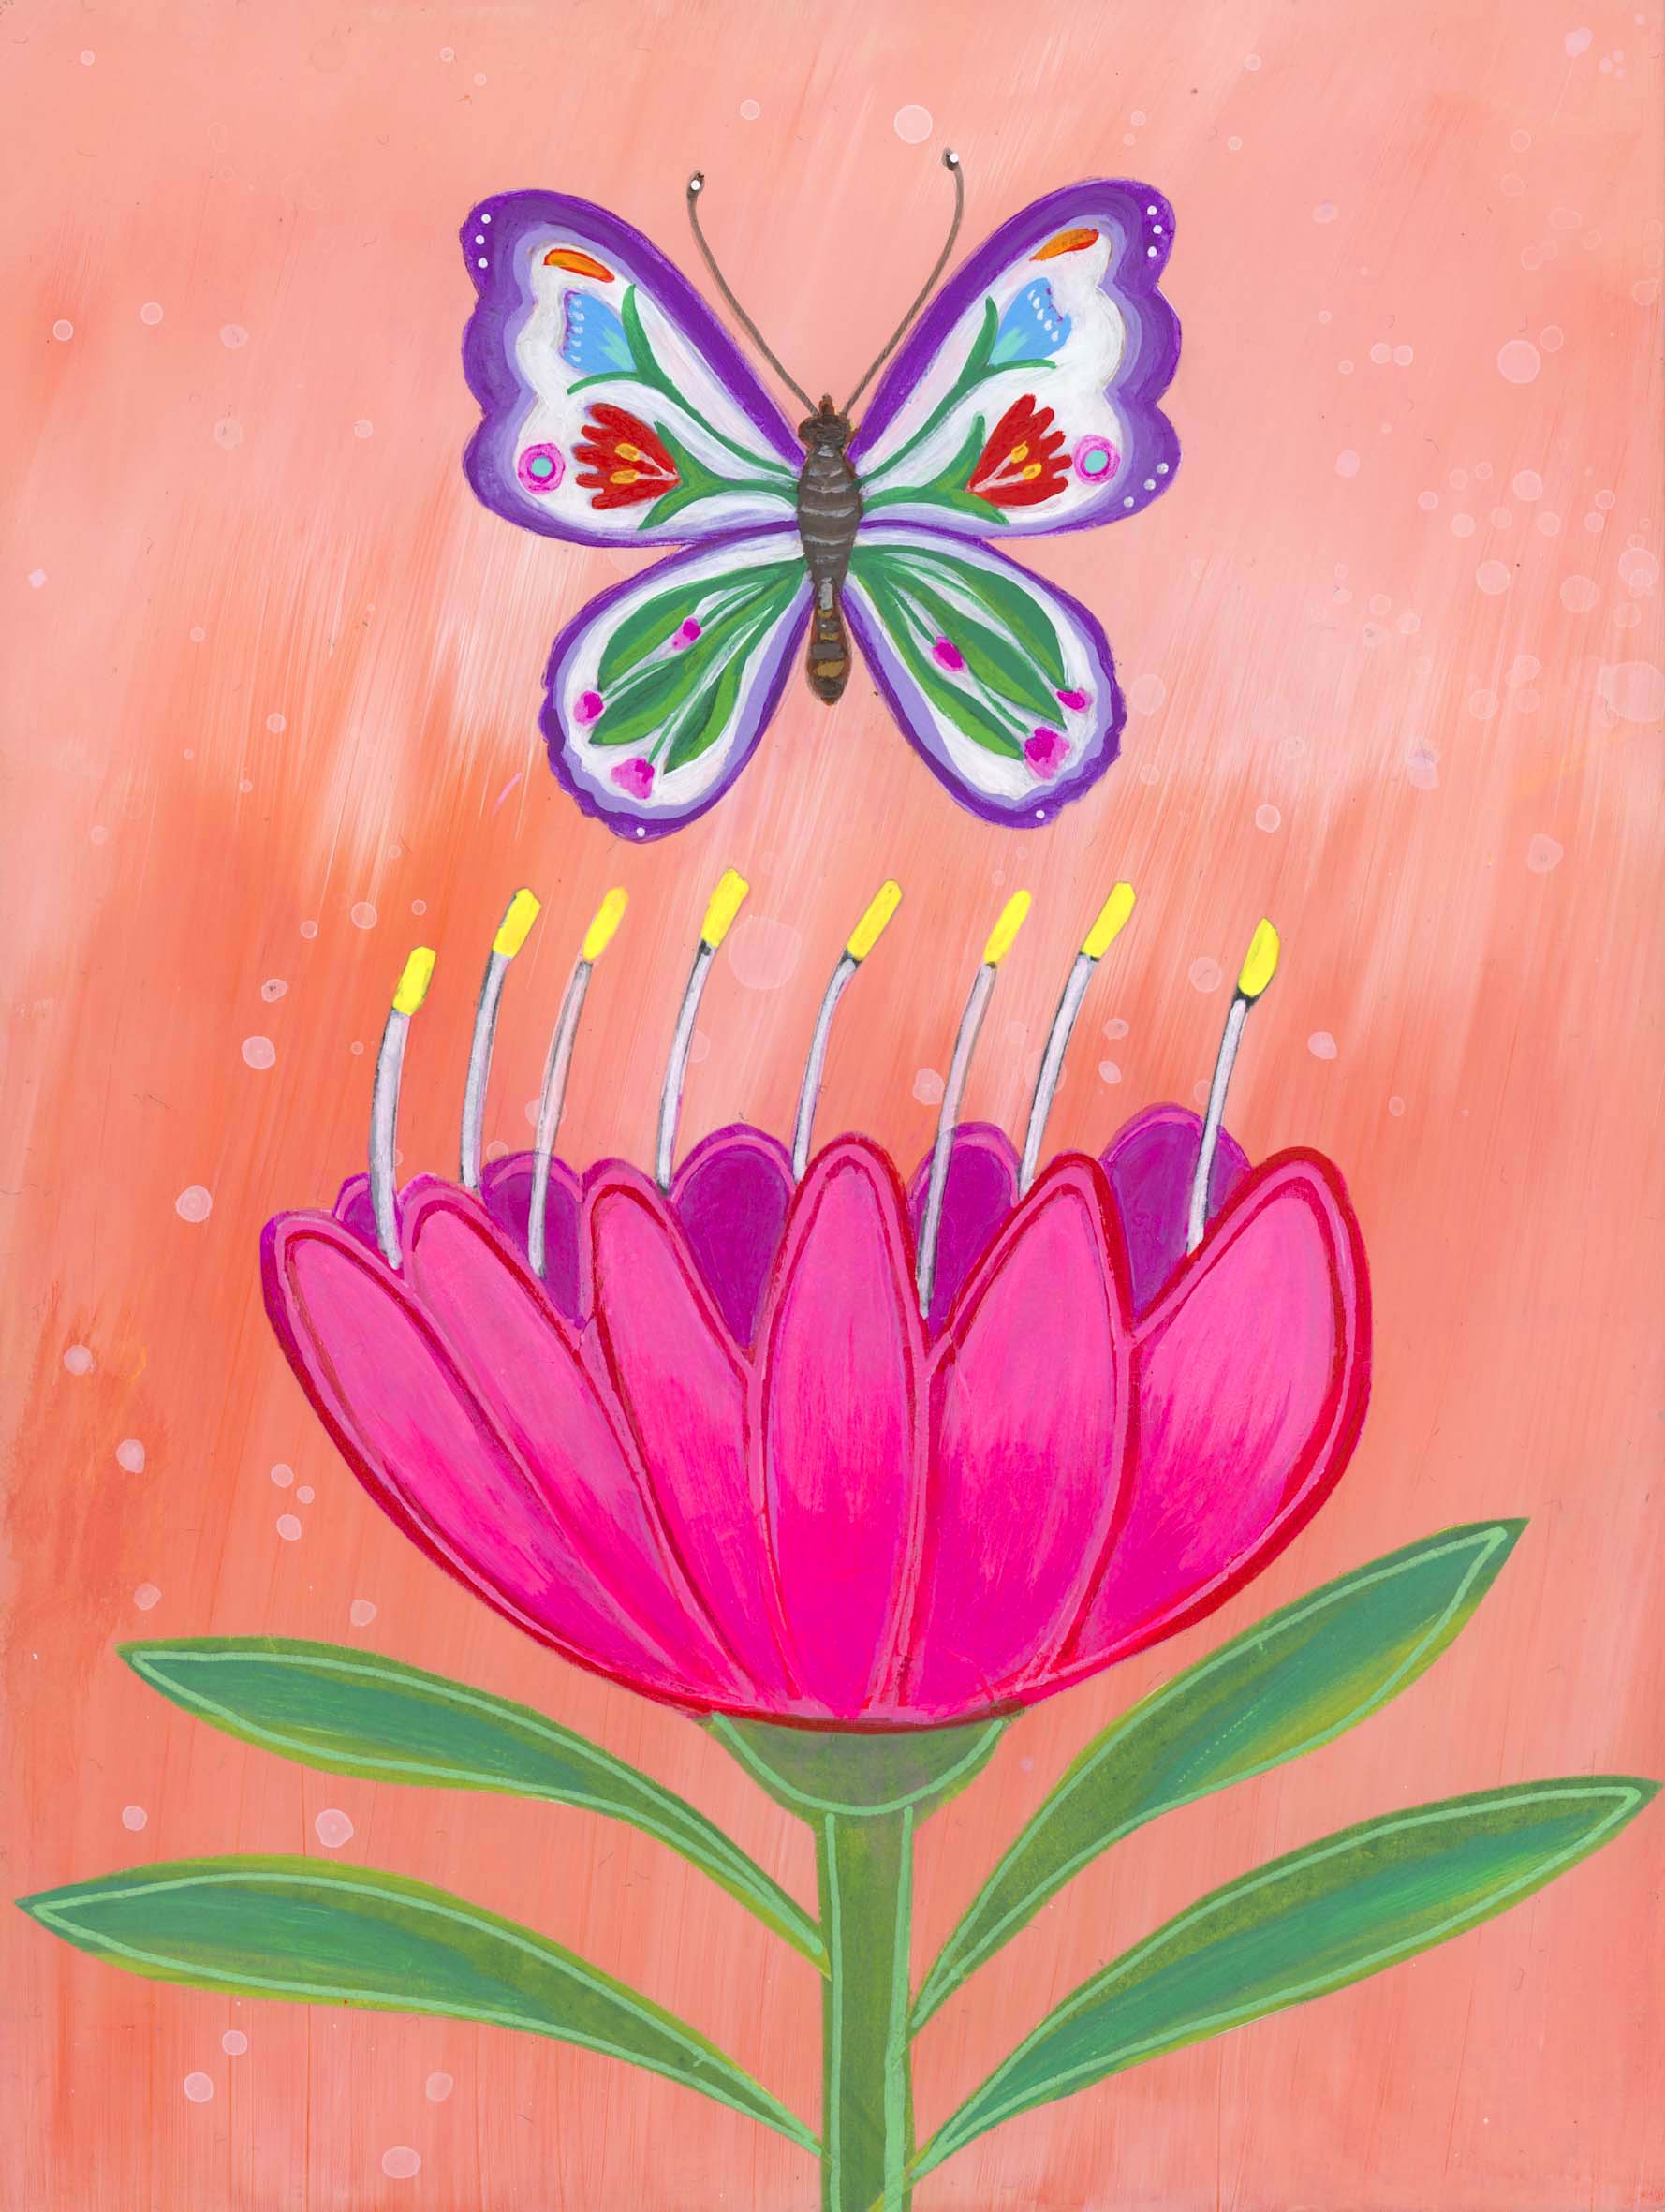 Butterfly Garden Peach Sky (6x8) Original Mixed Media Painting